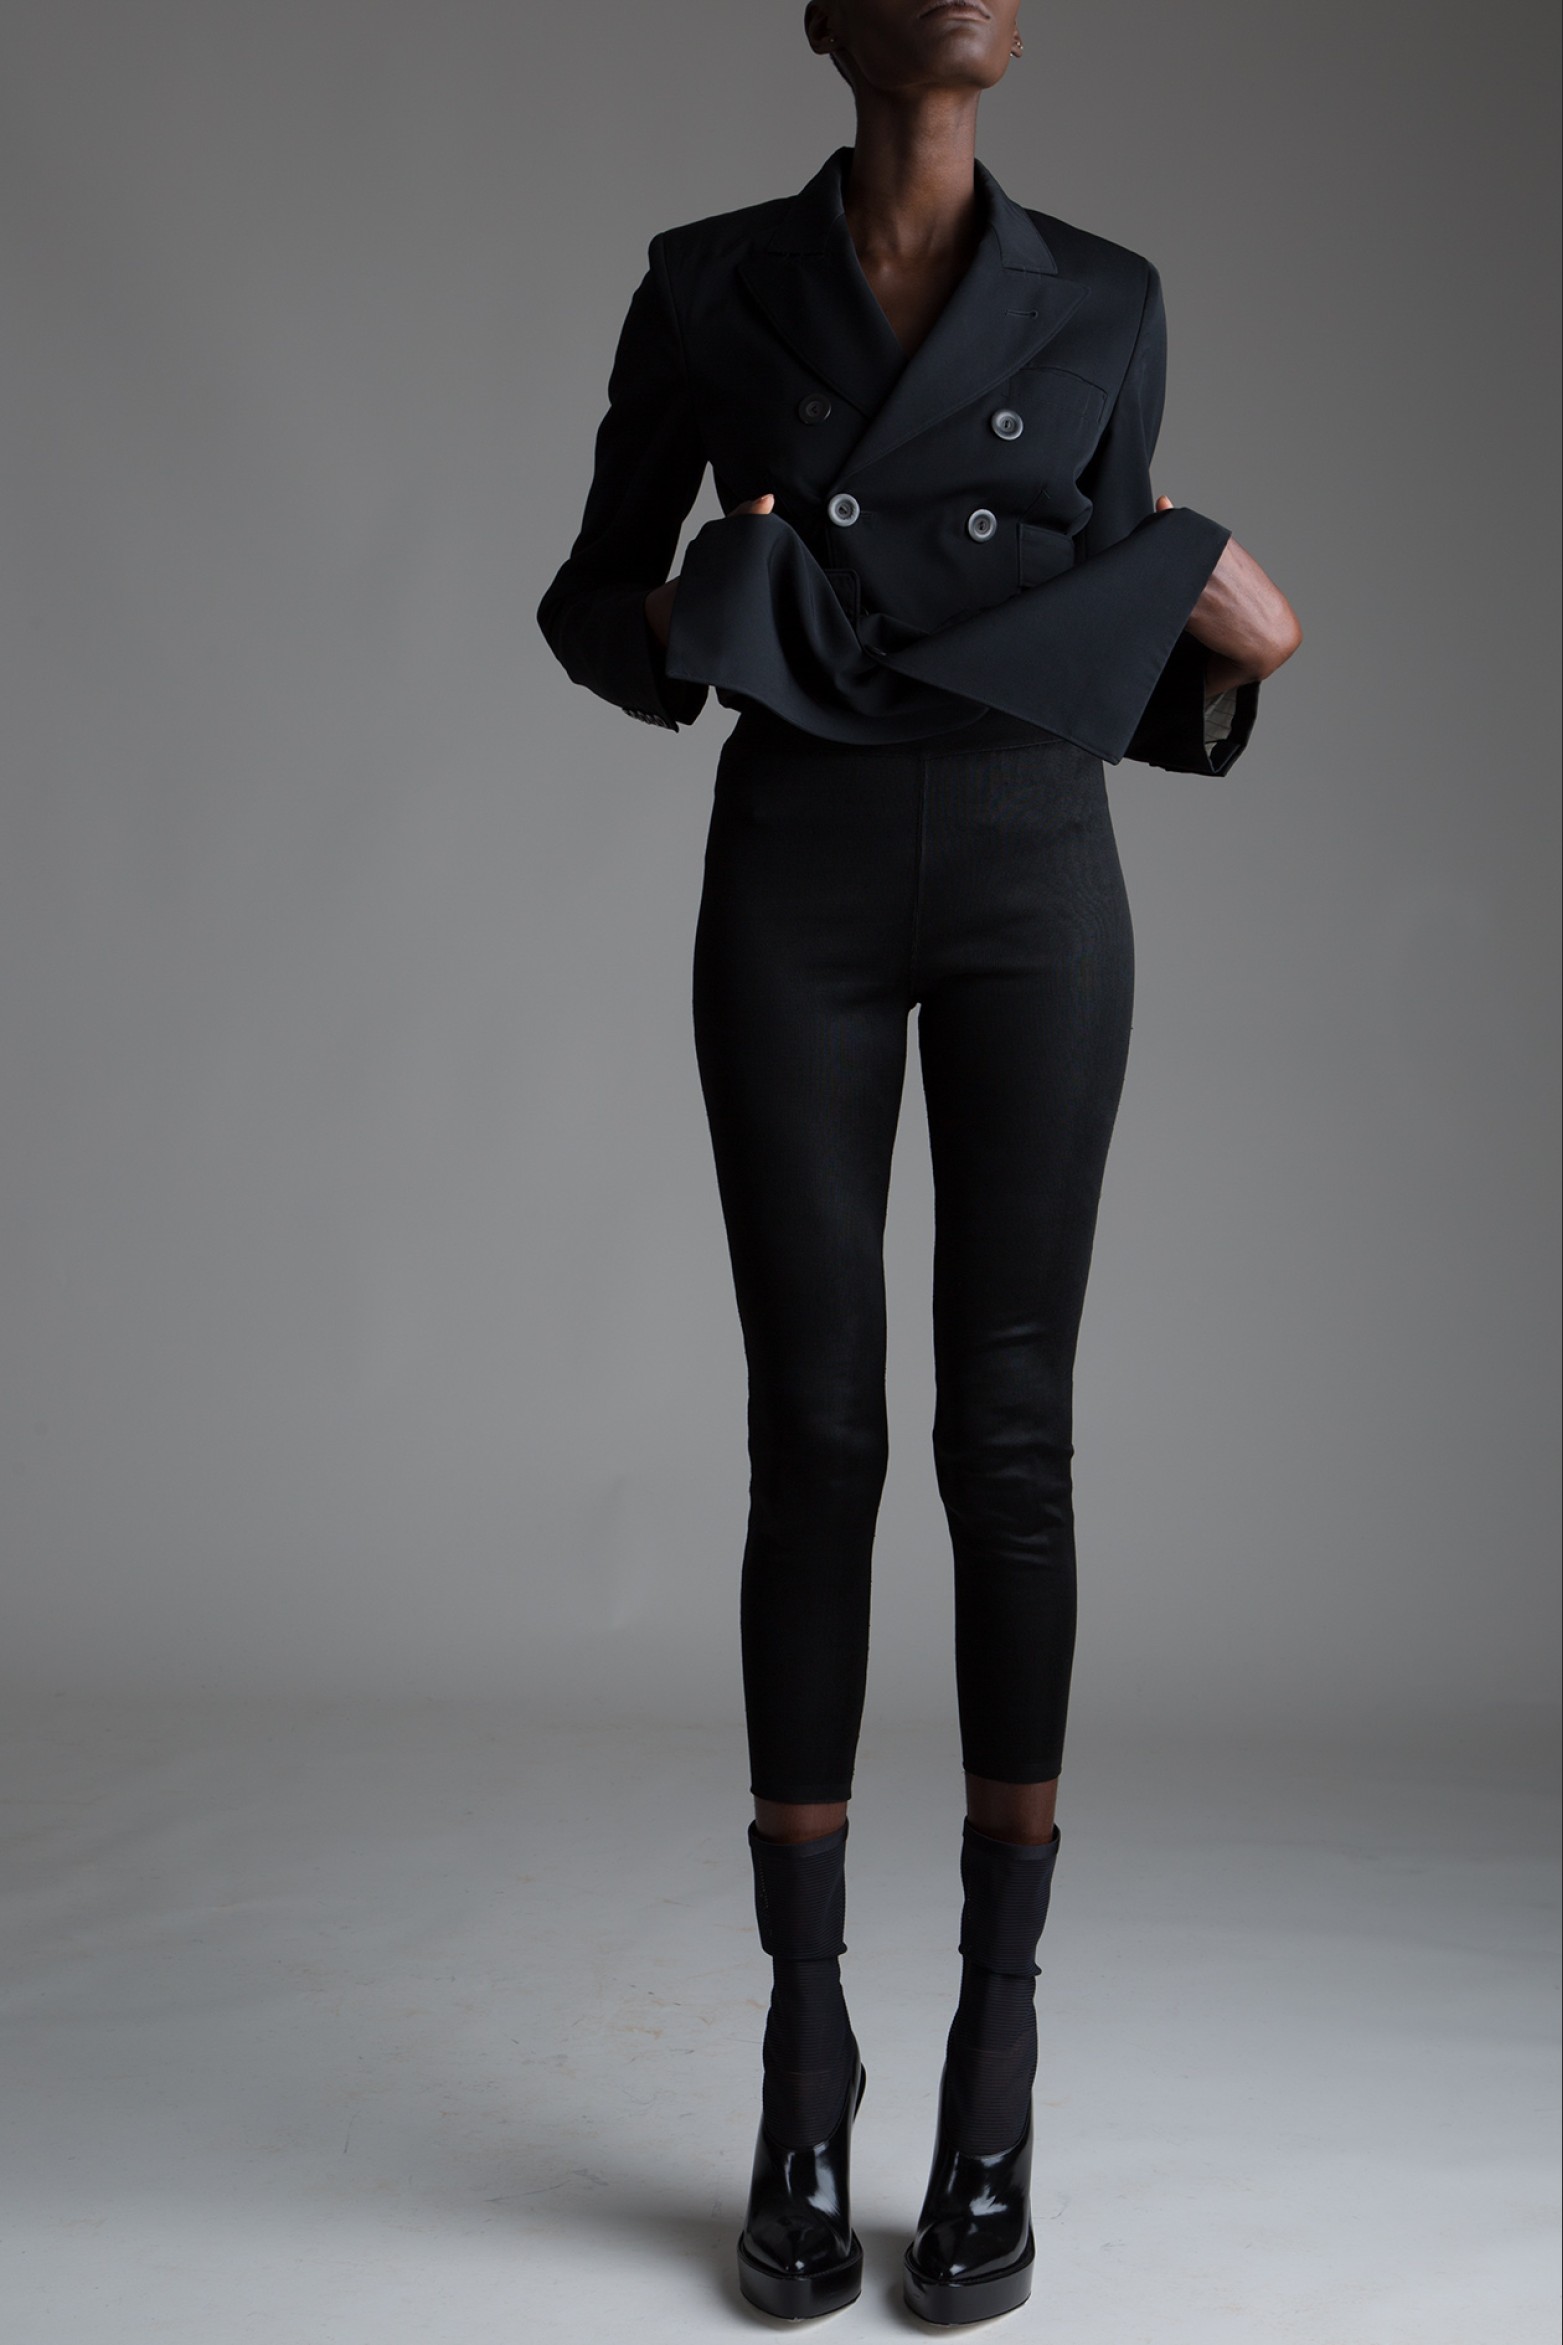 Jacquard knit high-rise leggings in black - Alaia